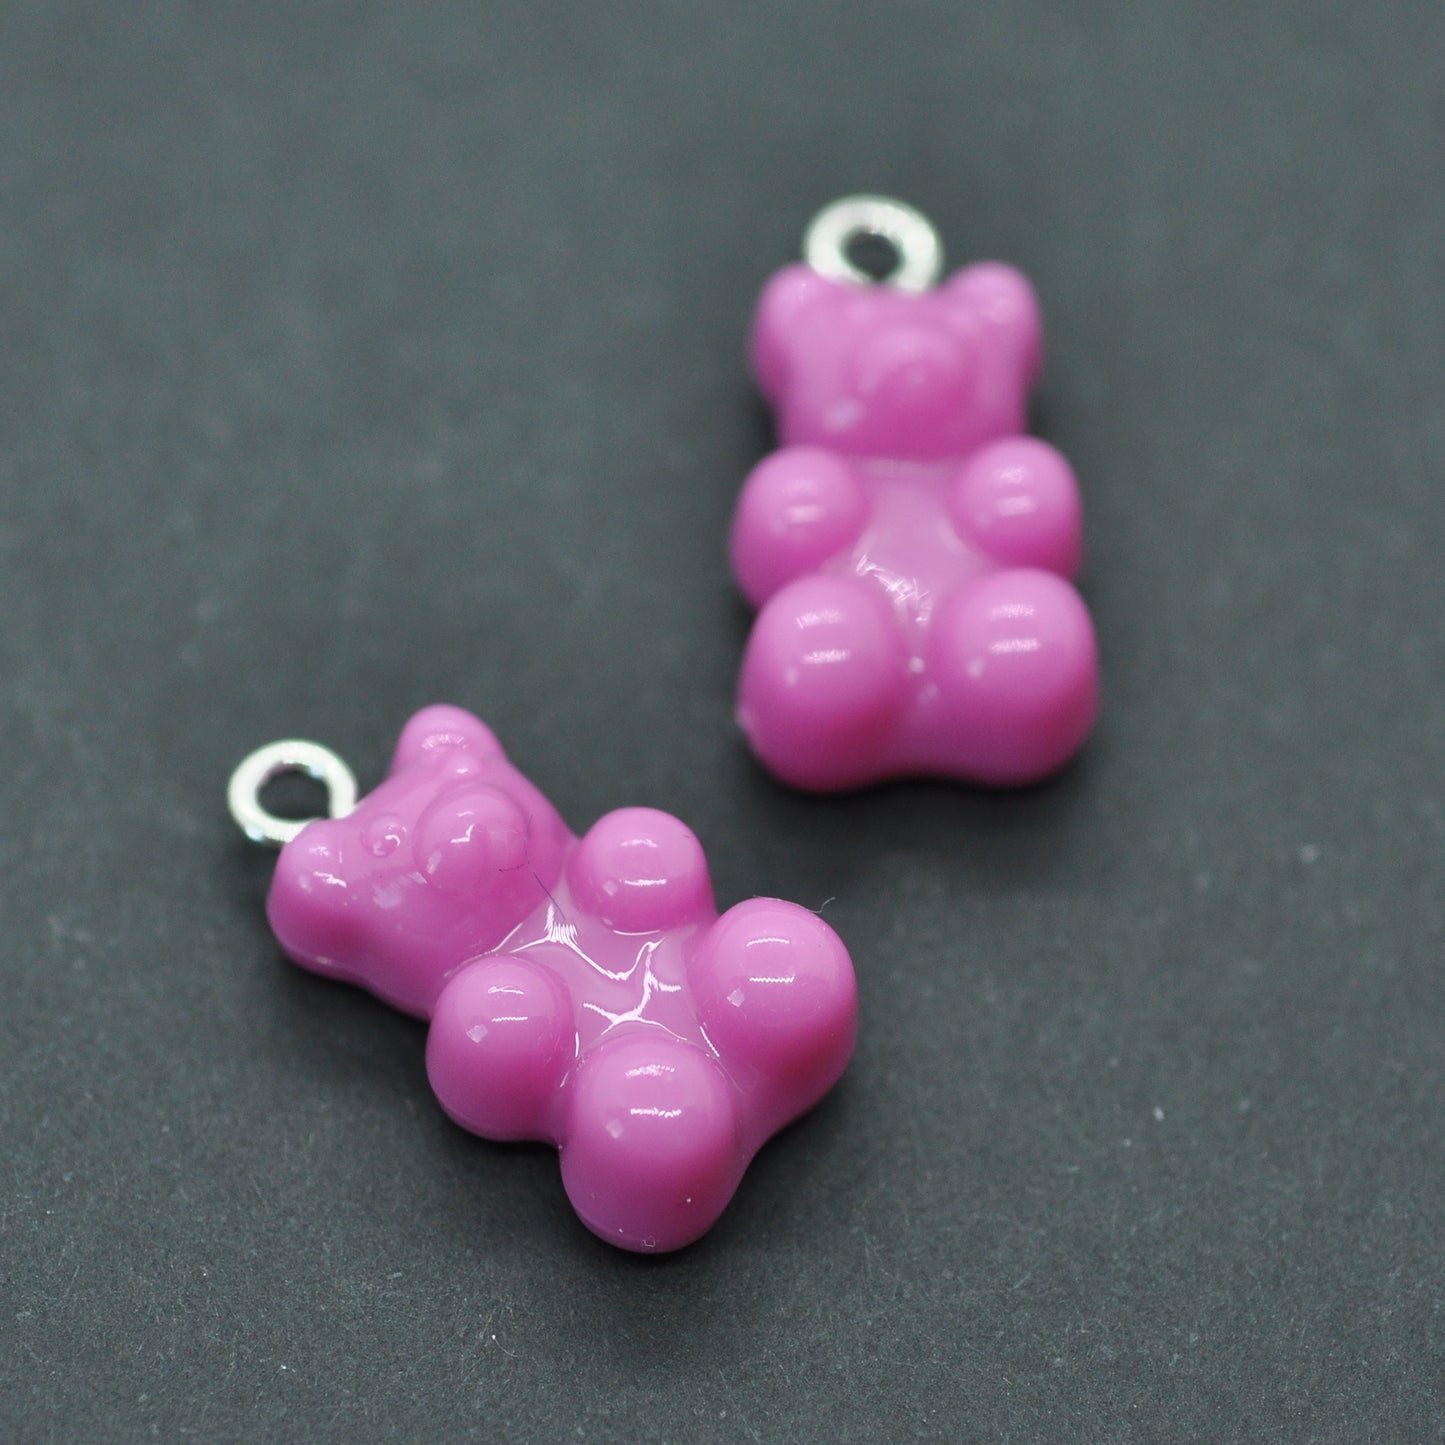 Gummy bear pendant / teddy with eyelet / pink / 15mm